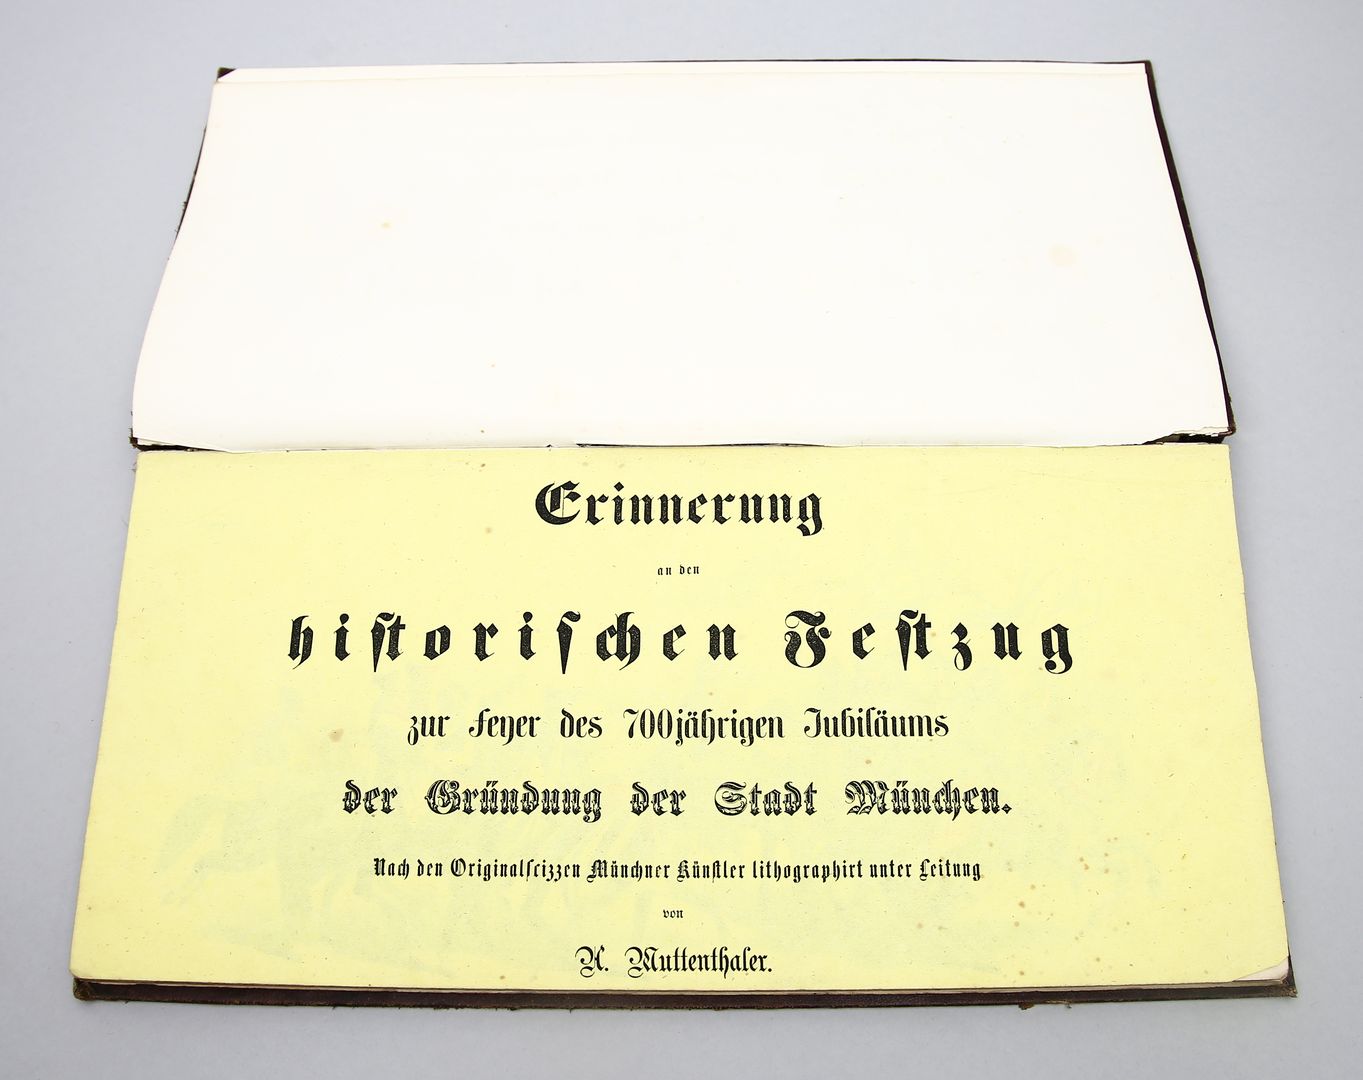 "Erinnerung an den historischen Festzug München September 1858".